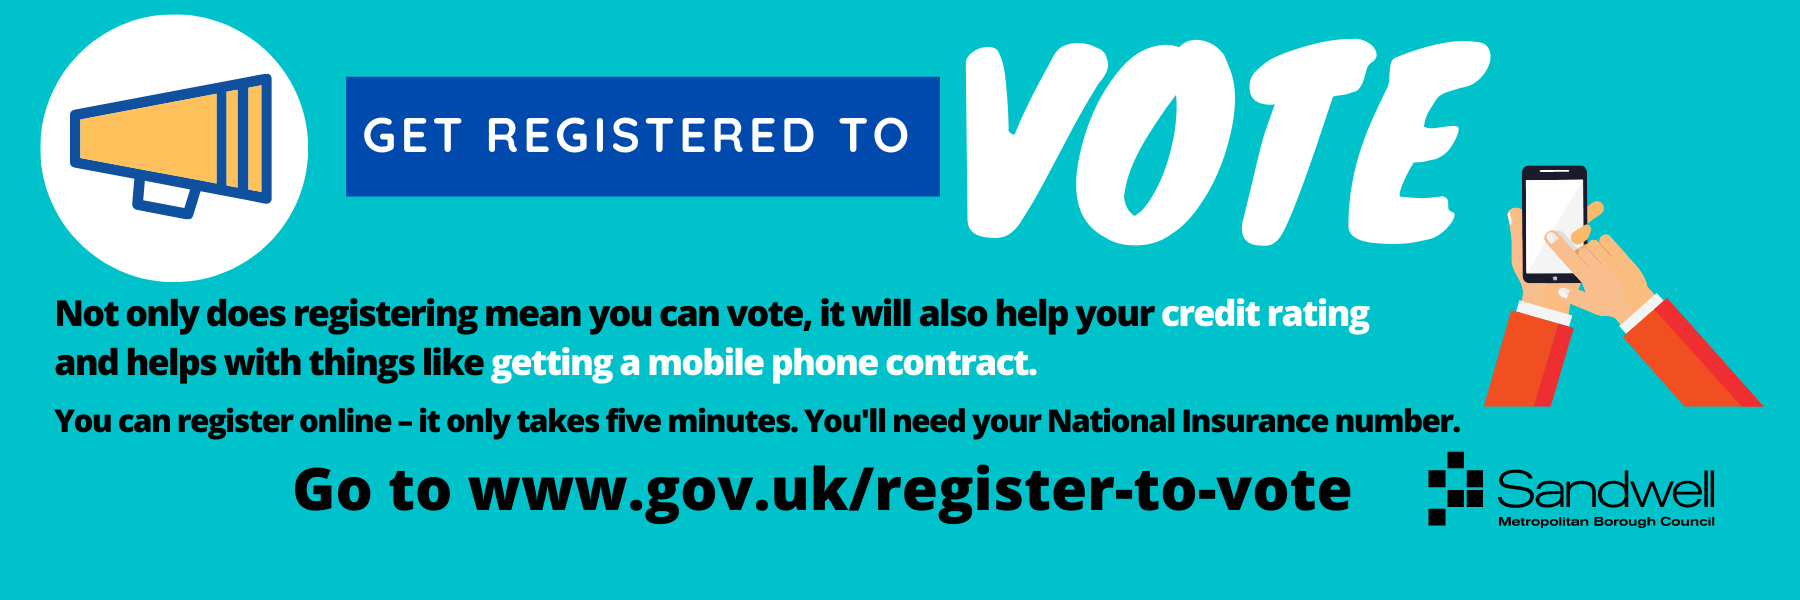 Register to vote banner image